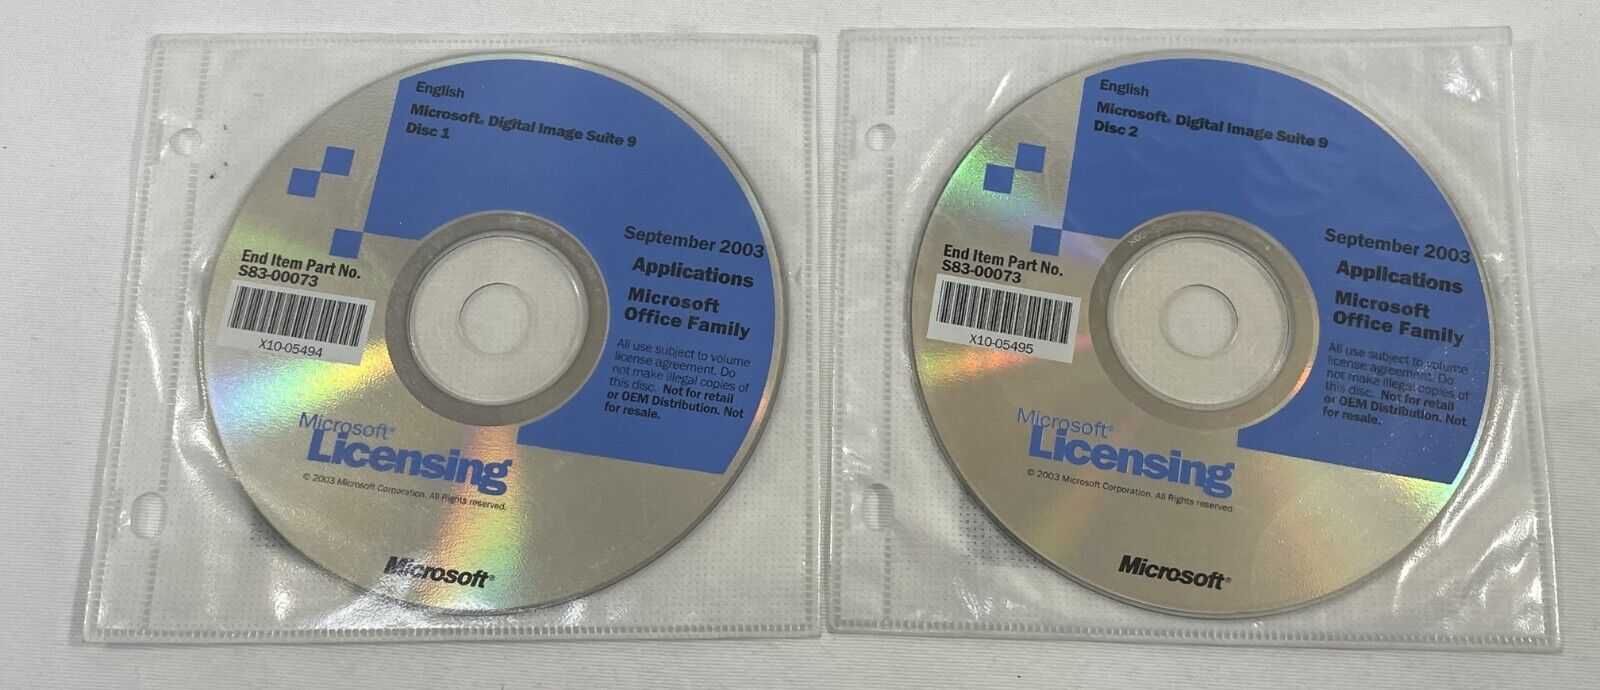 Microsoft Digital Image Suite 9 September 2003 Windows DVD Servers Disc 1 & 2